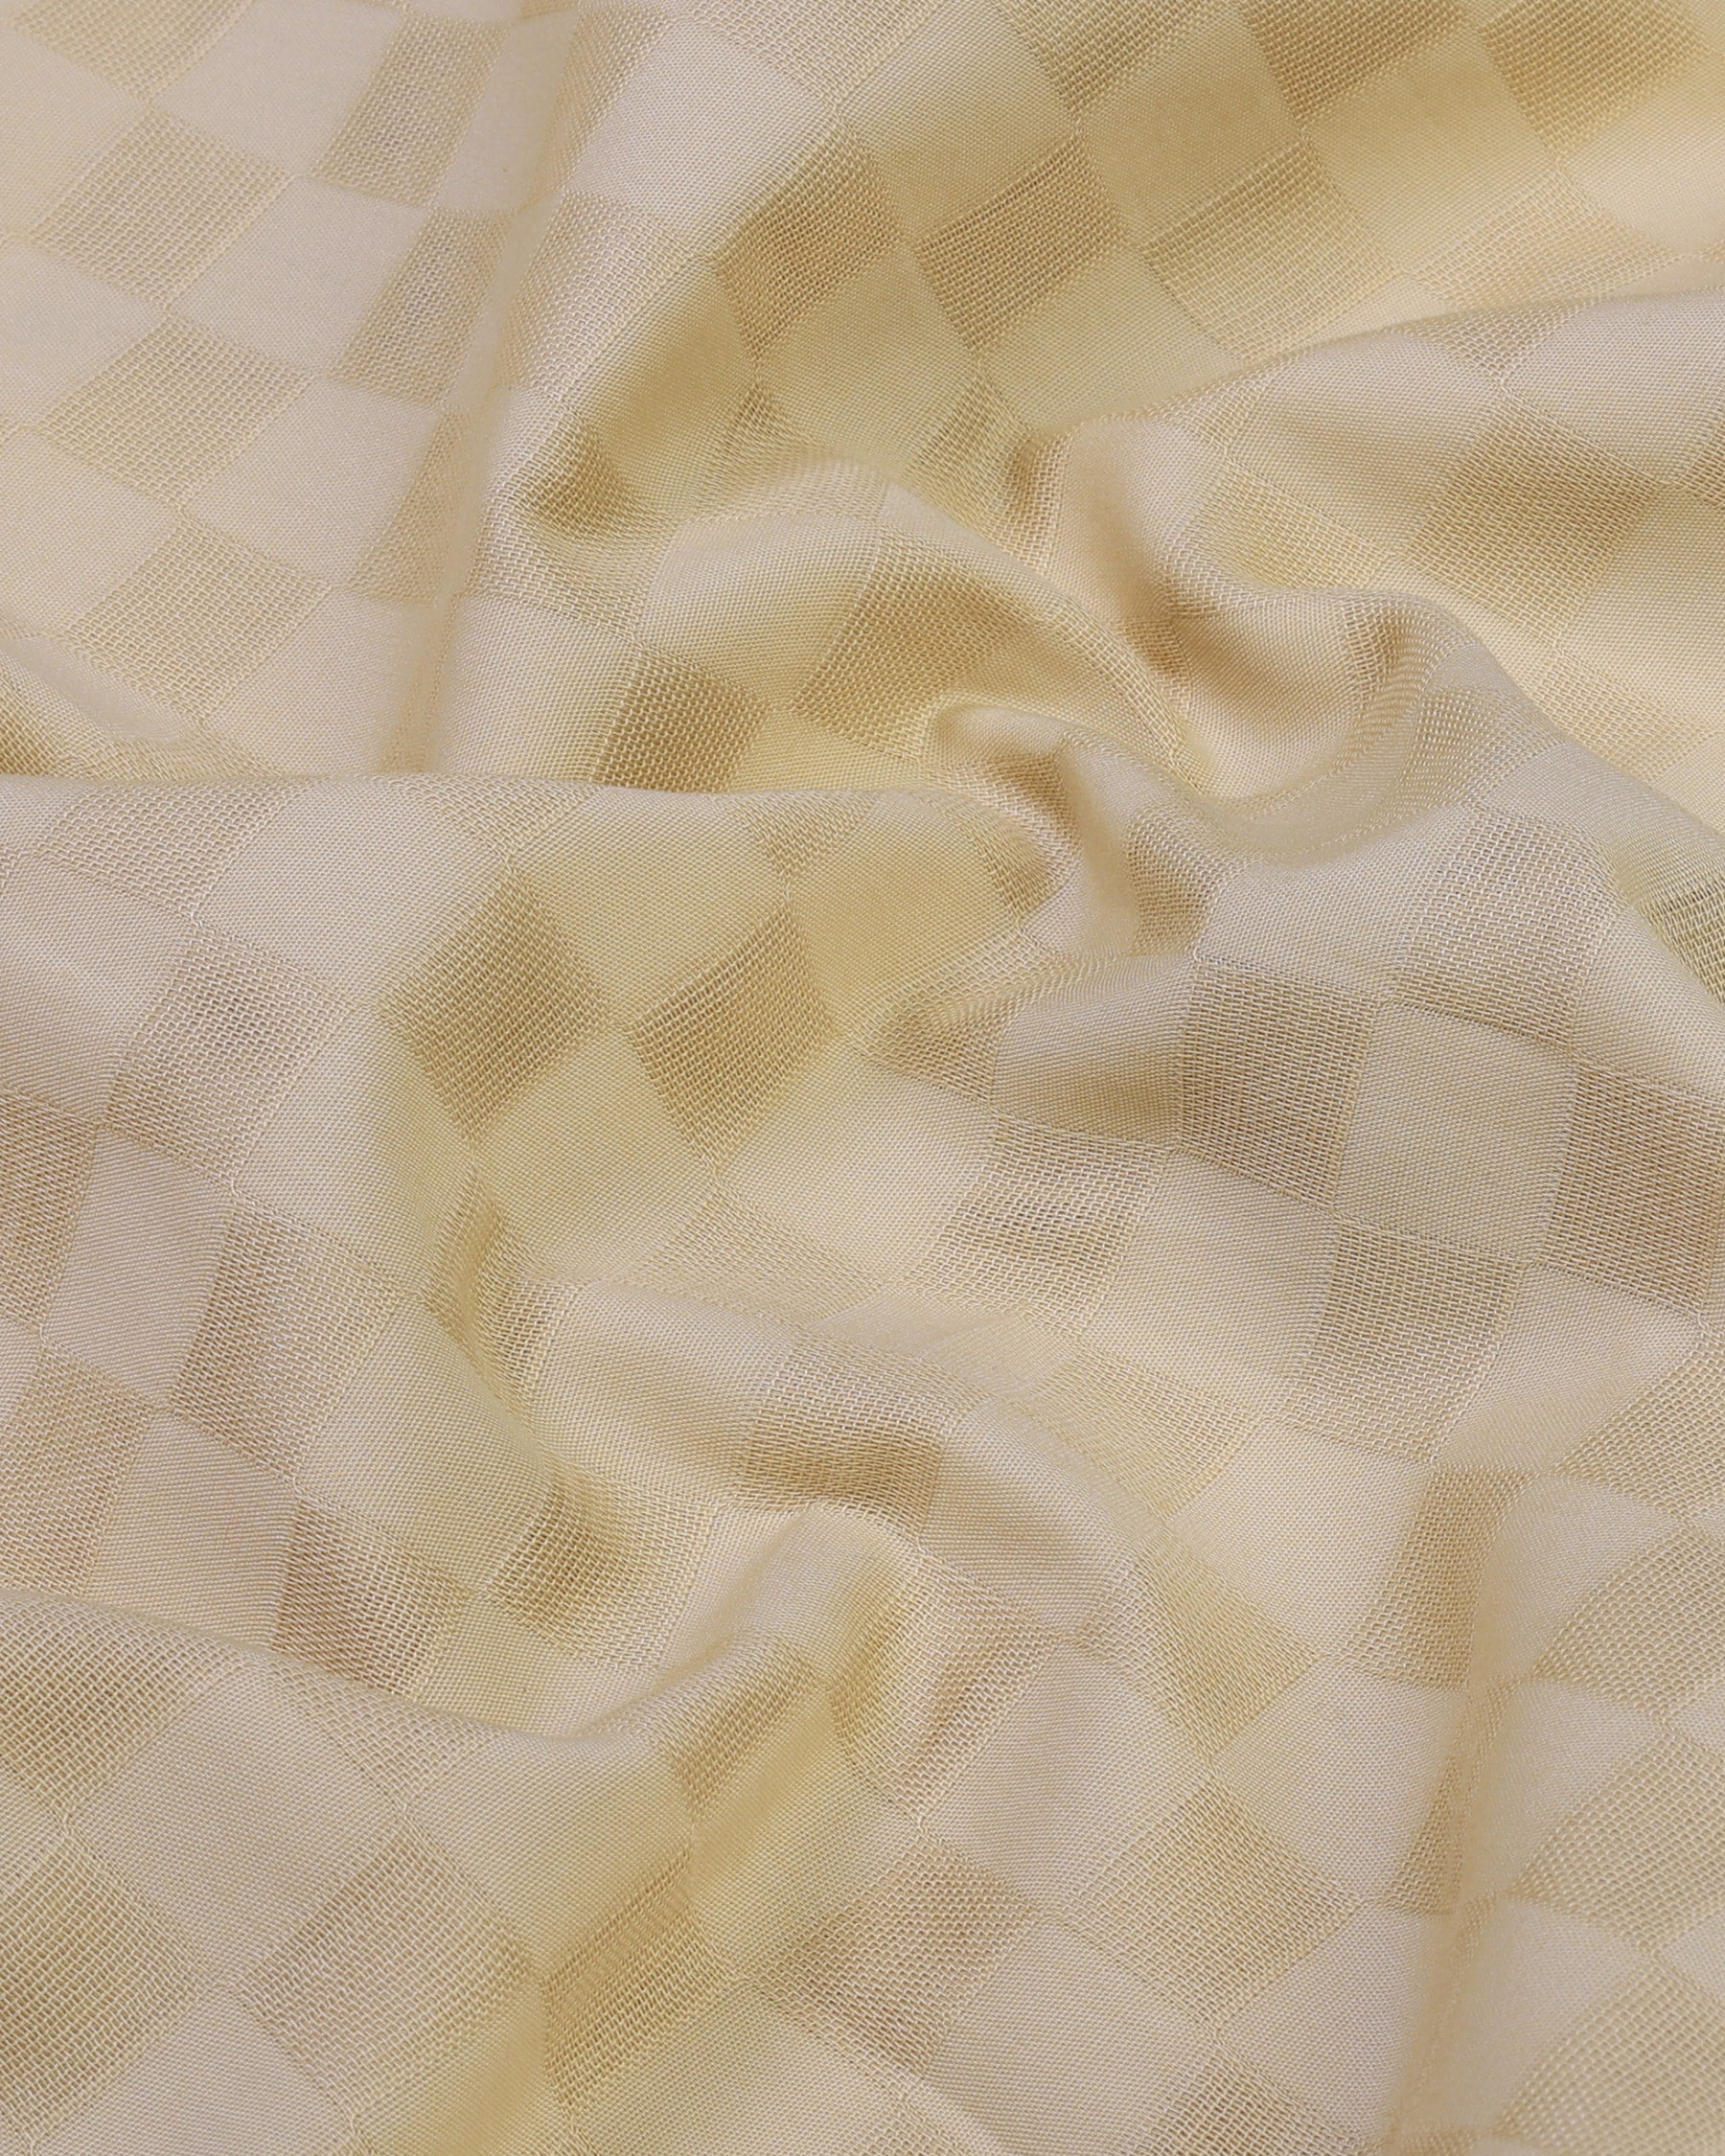 Creamwales-Optical Squares Dyed Dobby Jacquard Formal Check Shirt